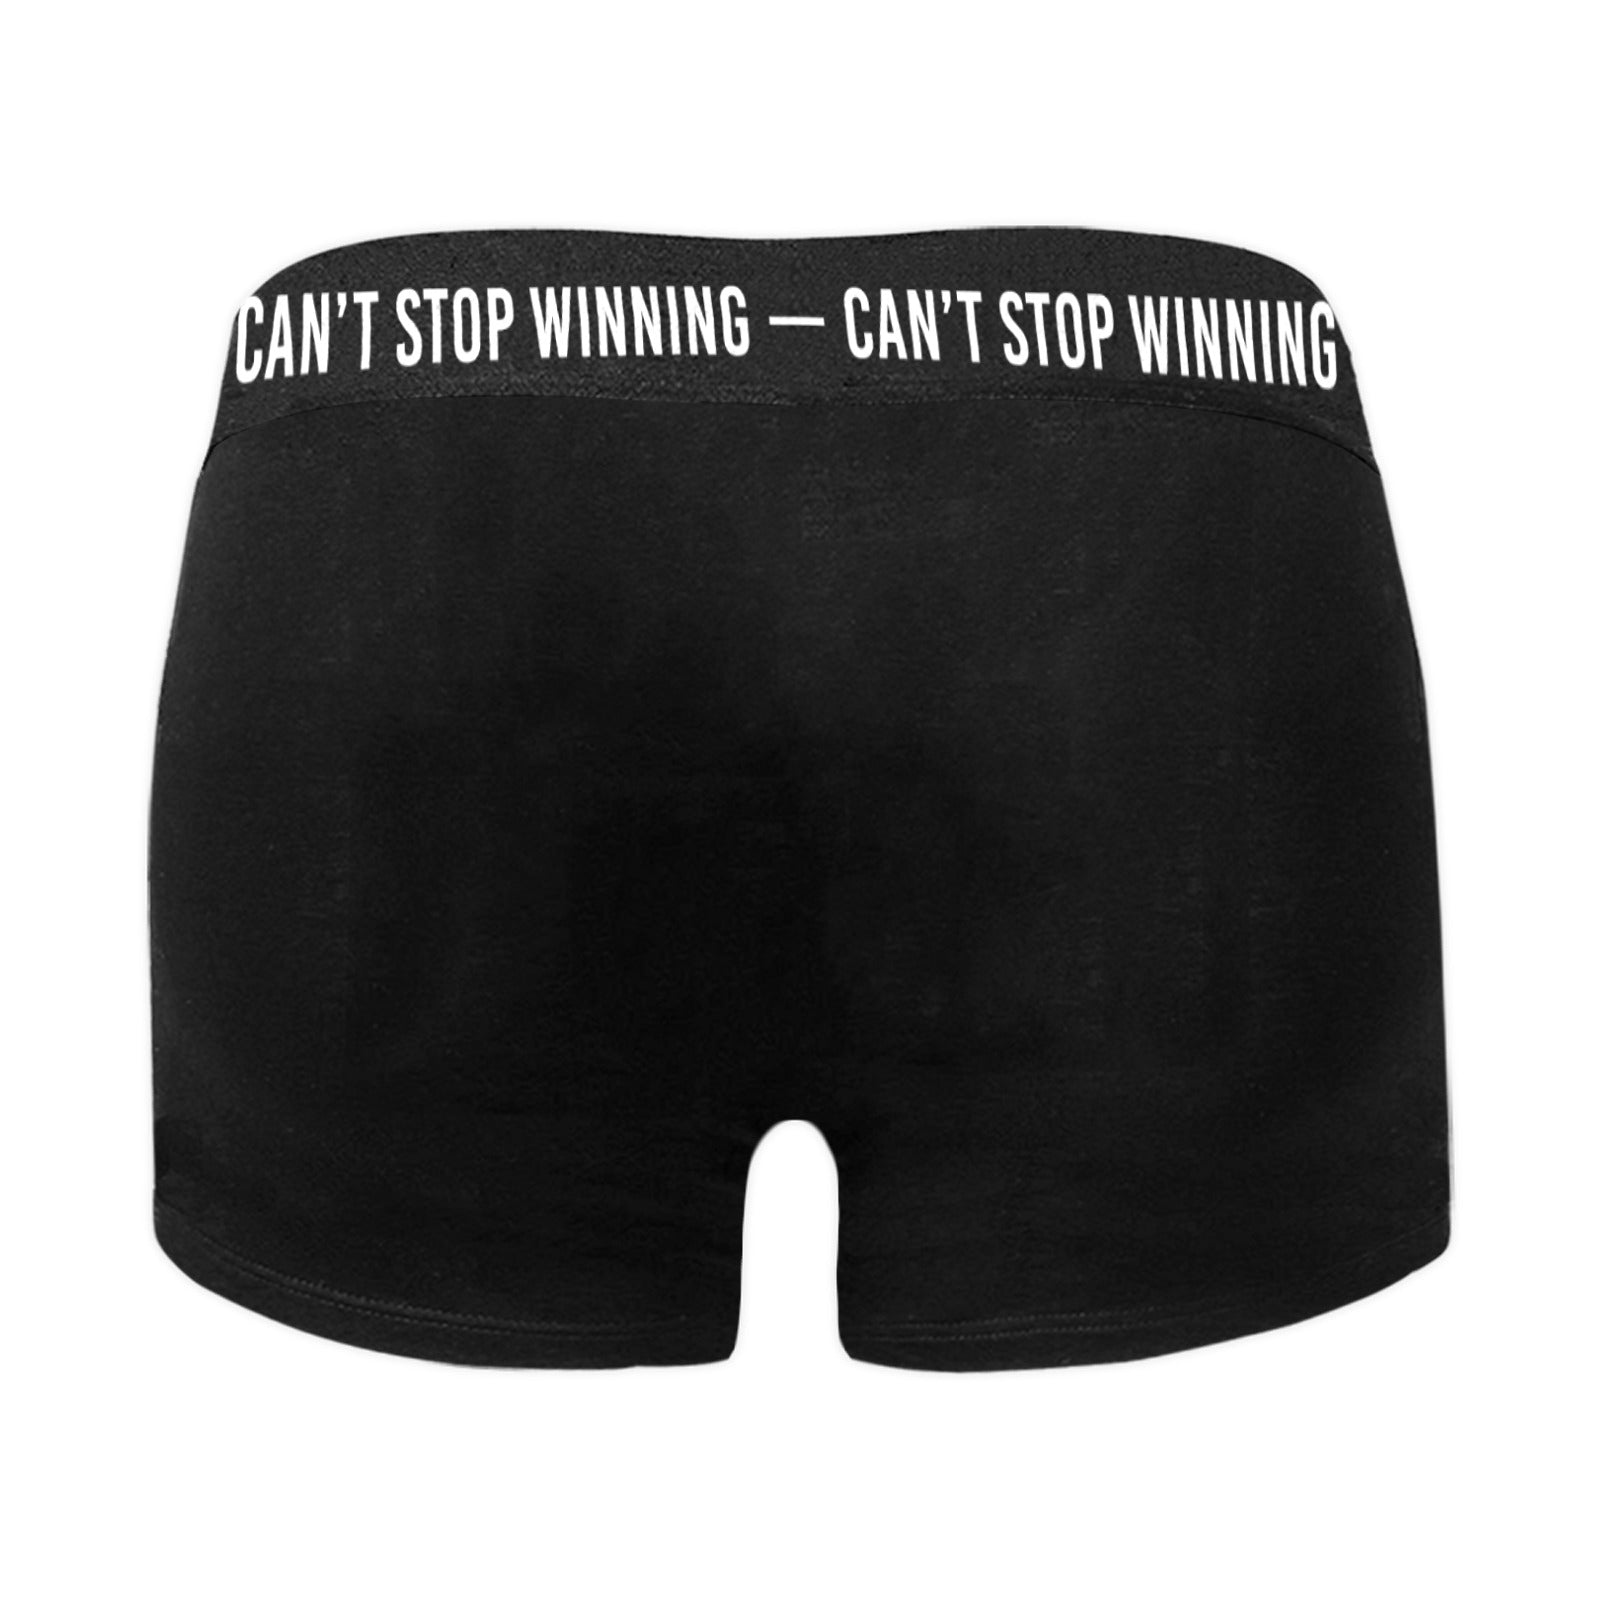 sexy men's underwear wear toxic can't stop winning boxer briefs mens underwear